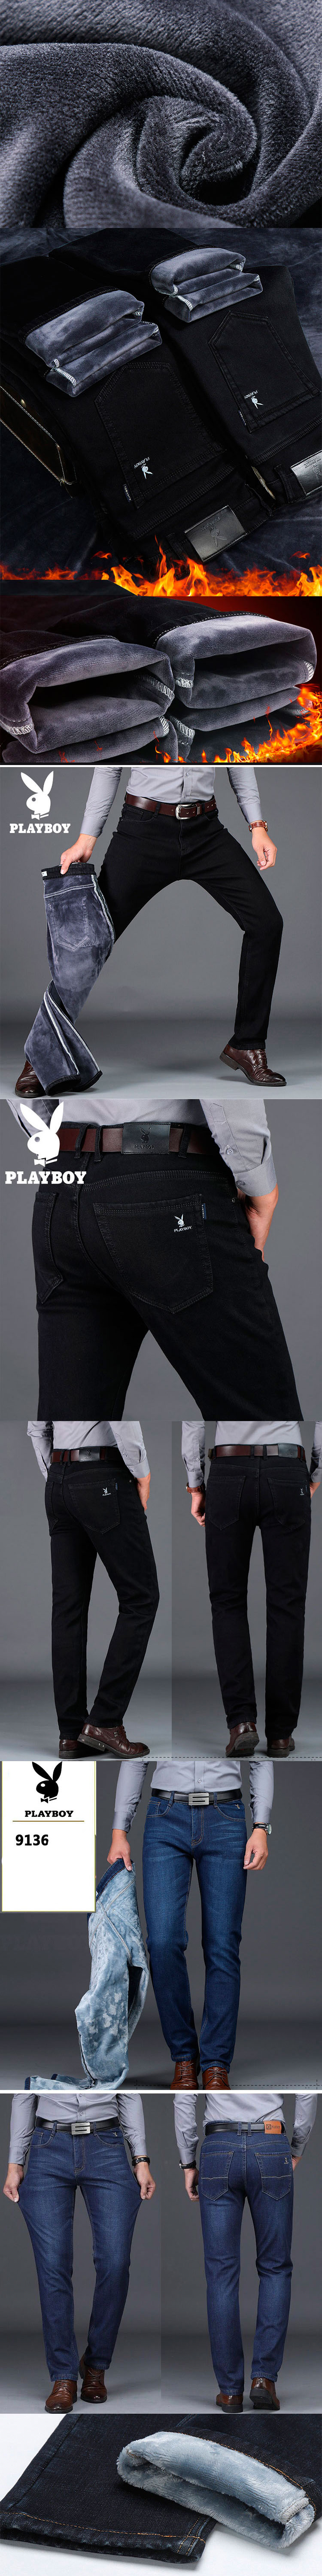  Jean-Playboy กางเกงยีนส์กันหนาว